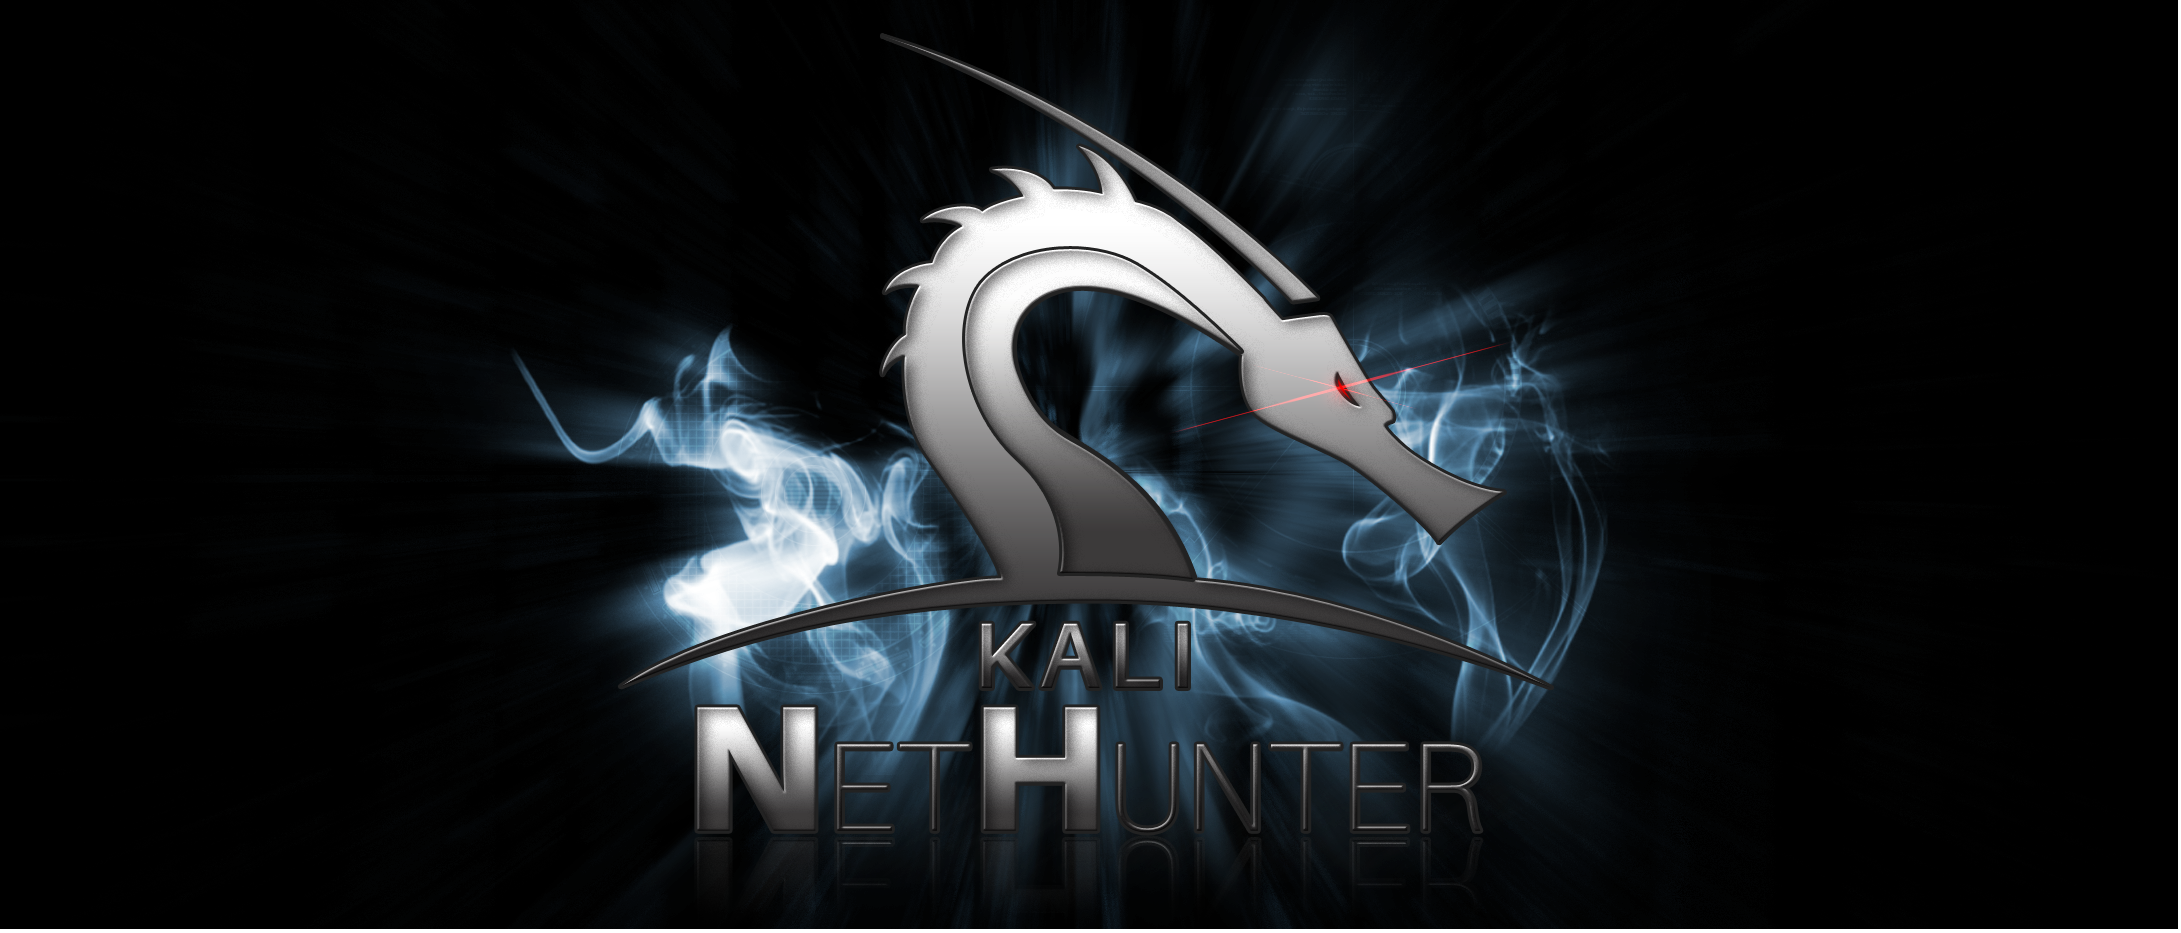  Images Kali Linux NetHunter Release Information Kali Linux Wallpapers